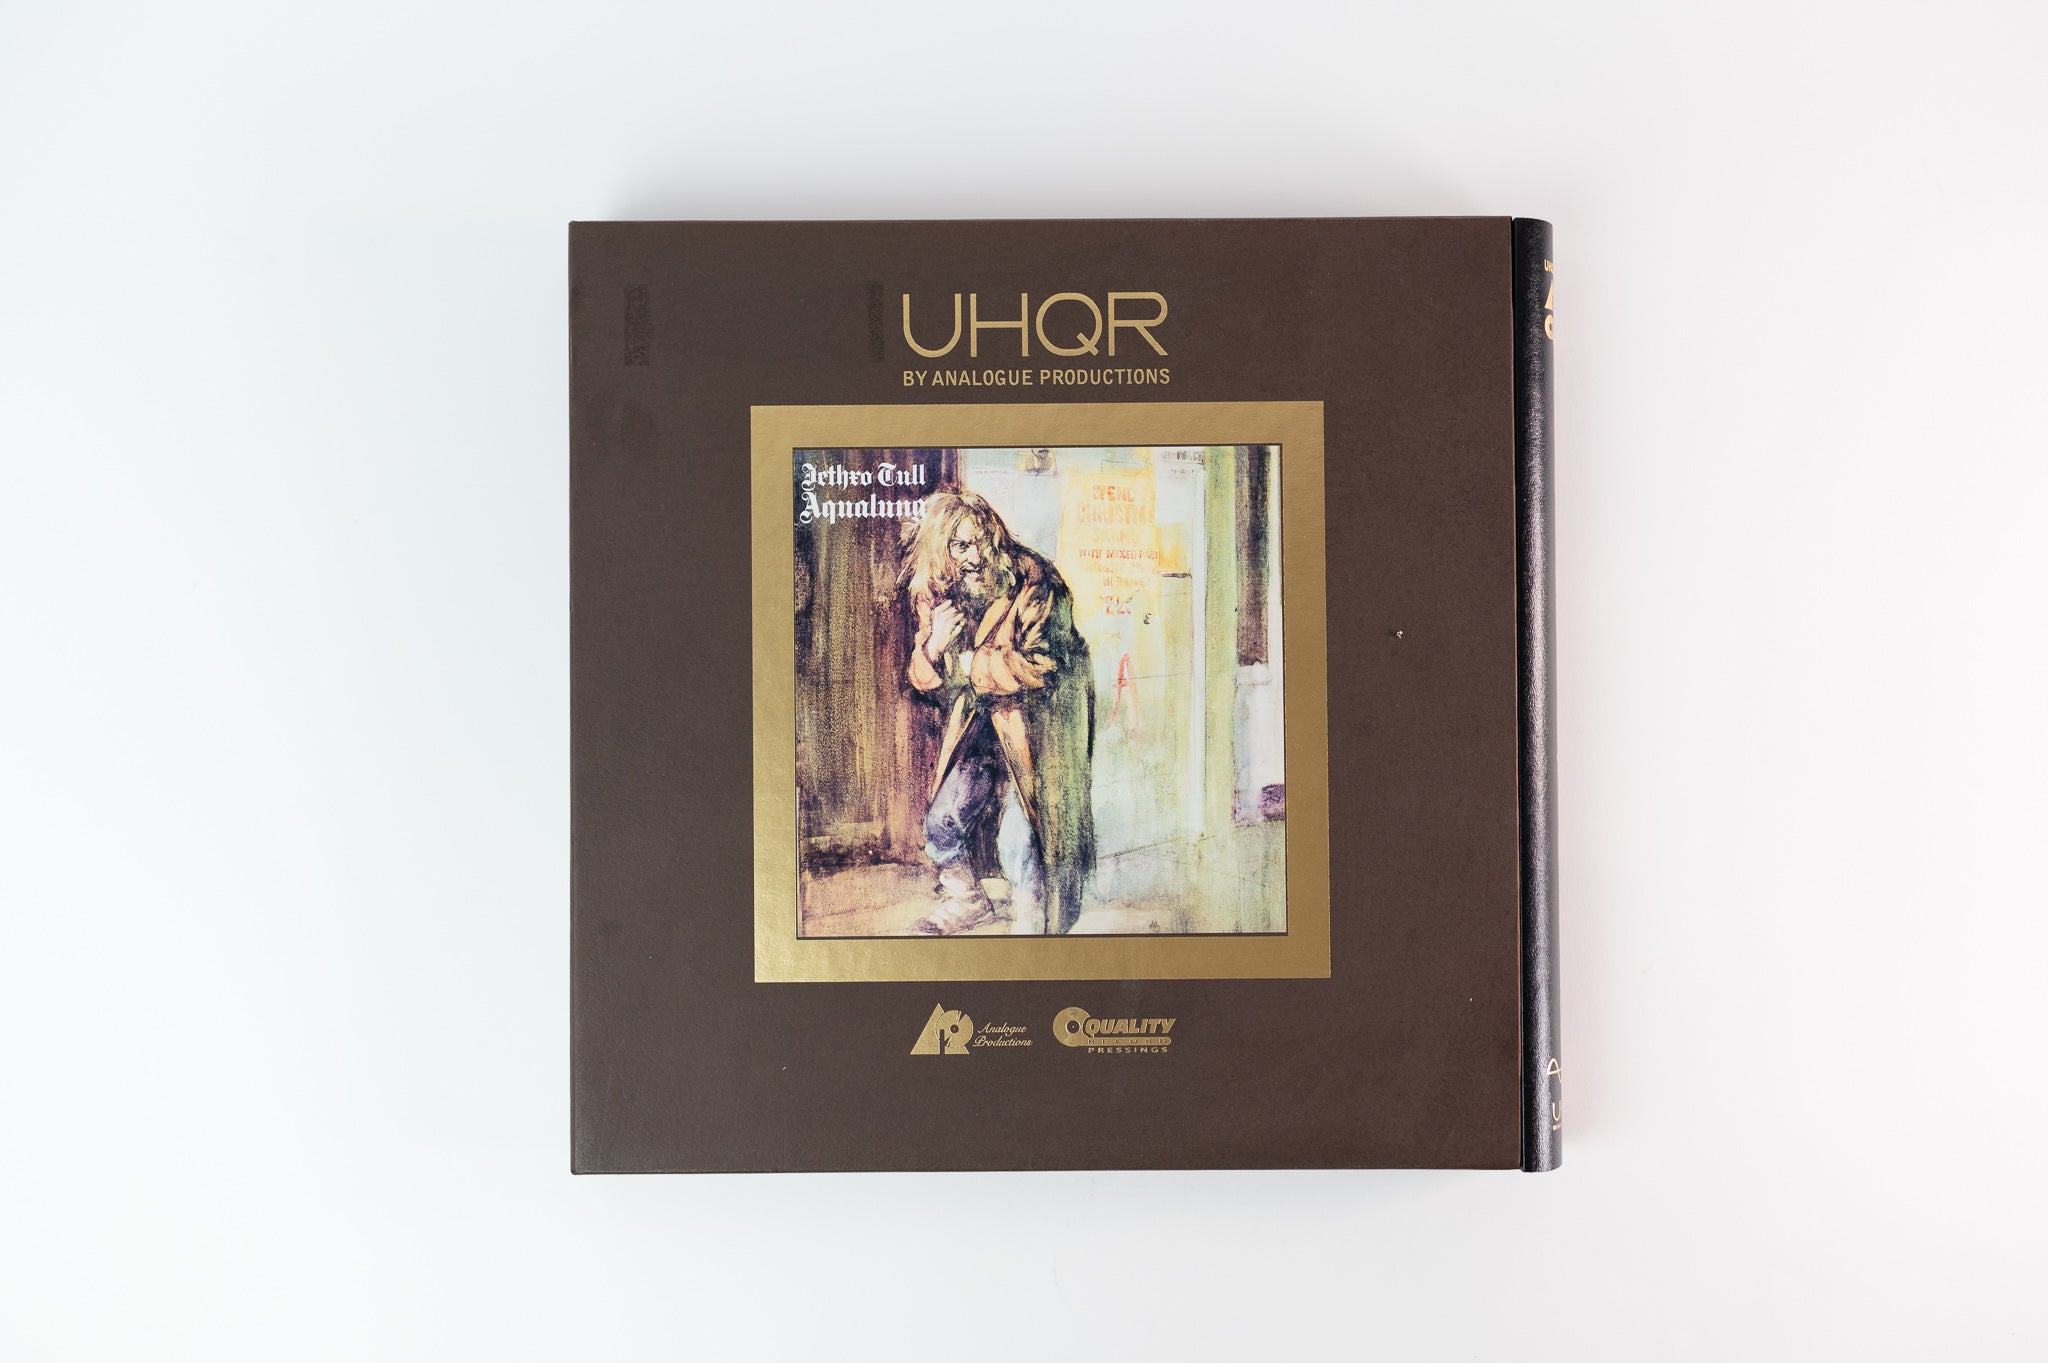 Jethro Tull - Aqualung on Analogue Productions - UHQR Box Set